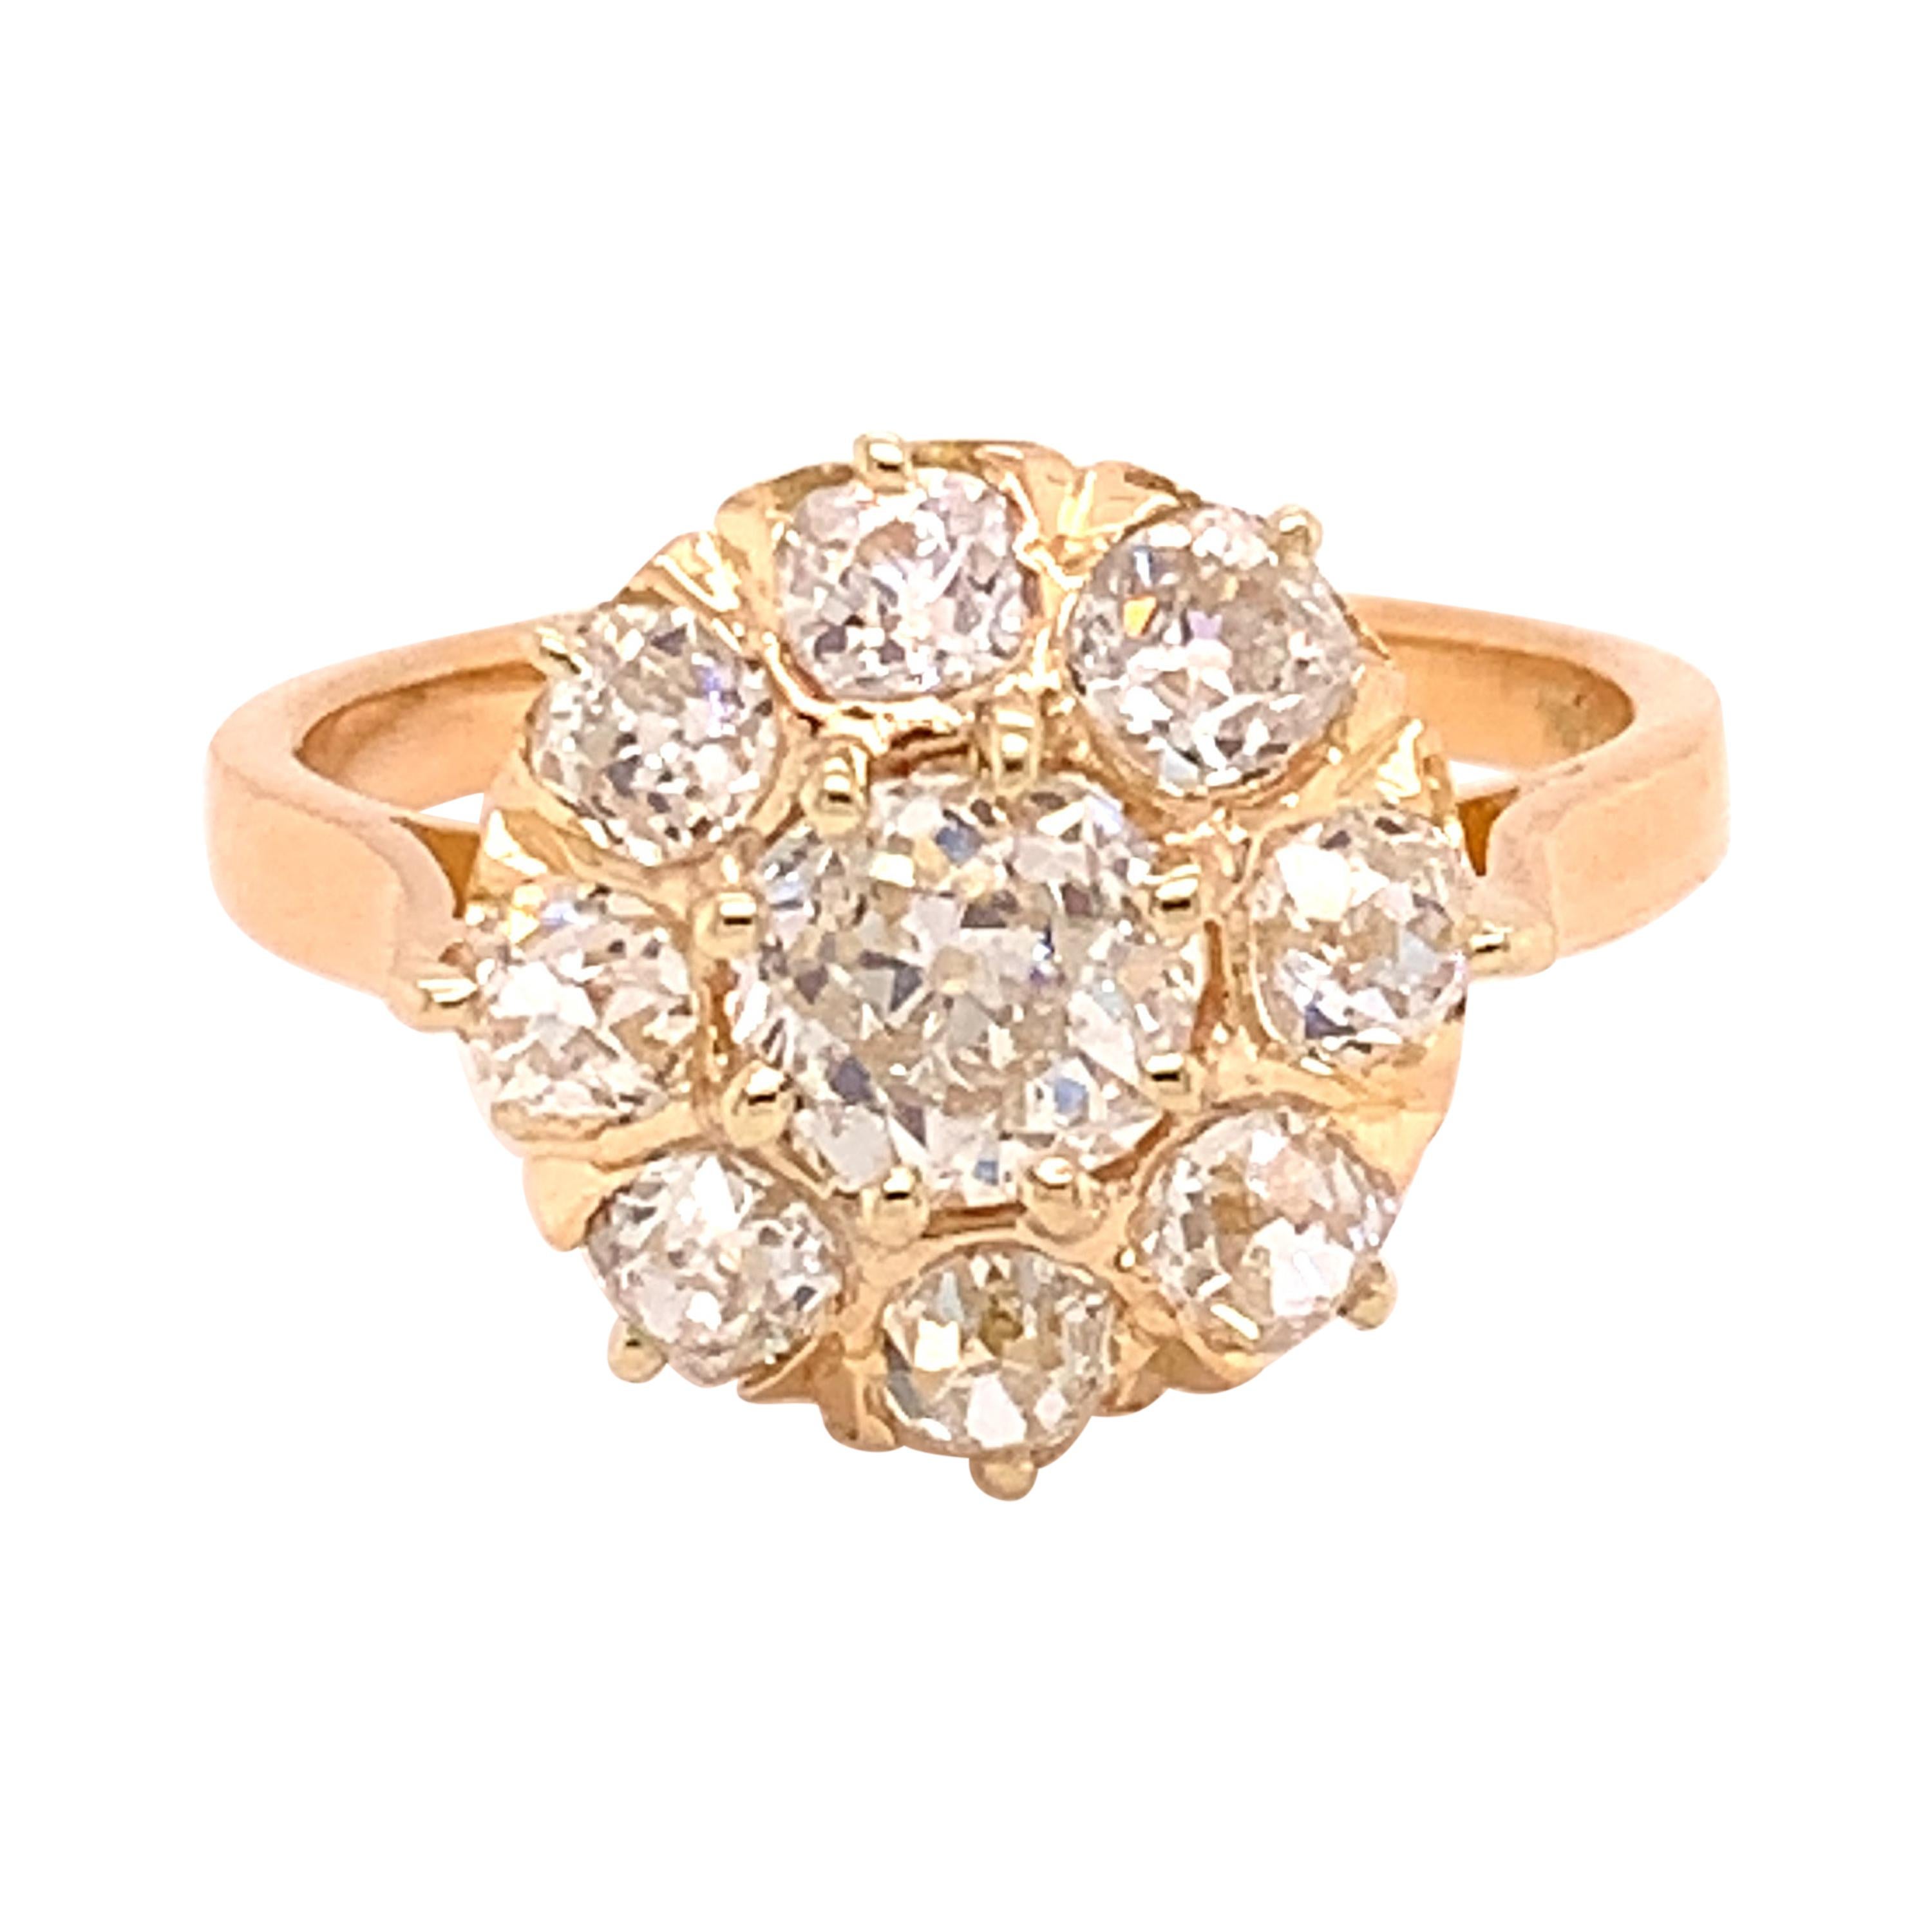 18k Gold Victorian Mine Cut Genuine Natural Diamond Ring 2.48 Carats TW '#J4894'